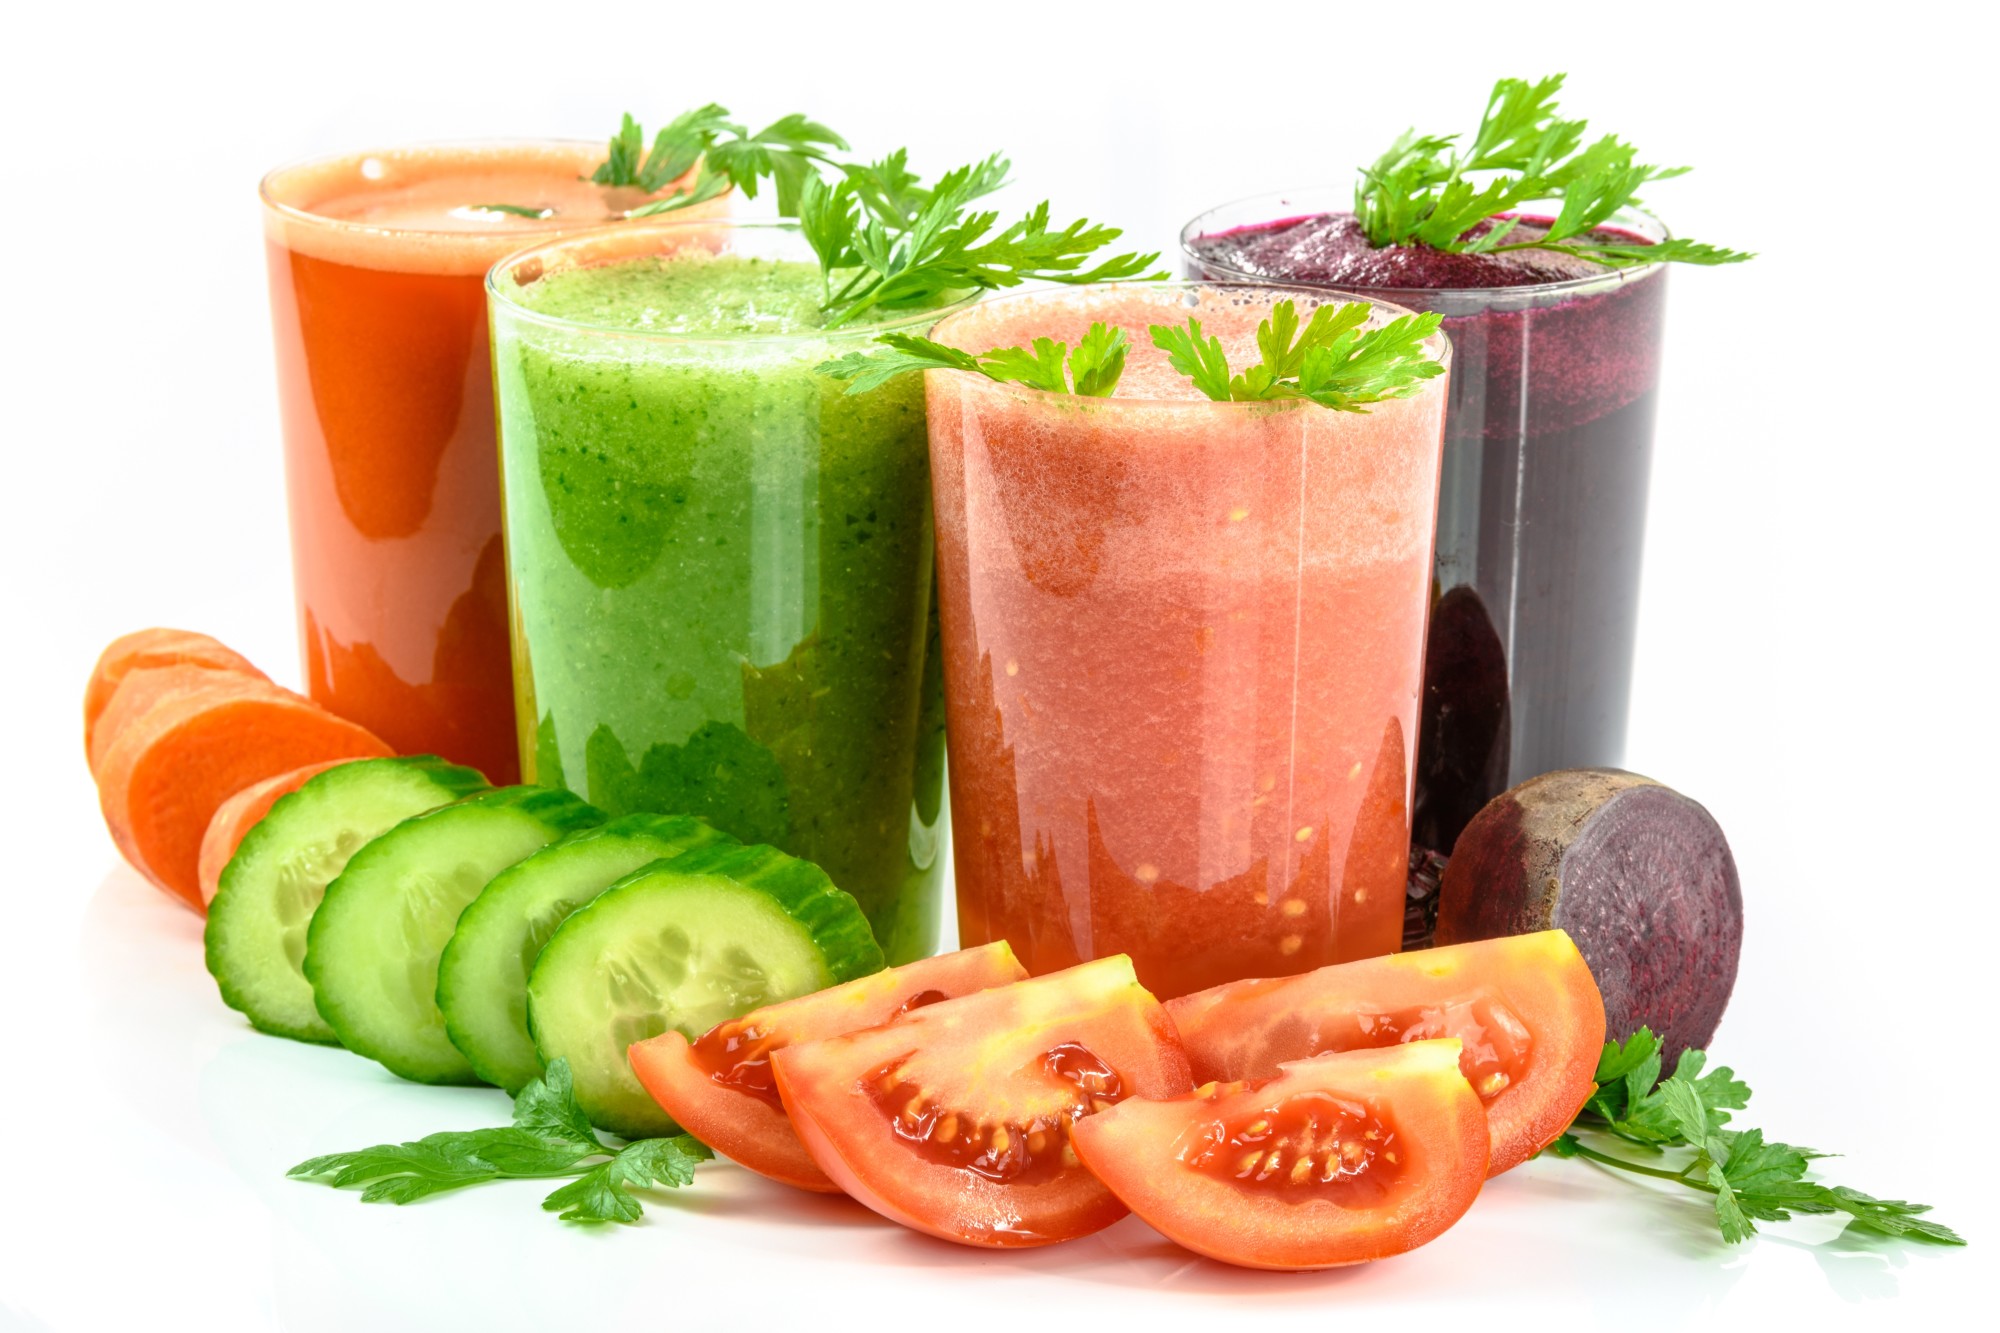 Various Fruit Juices